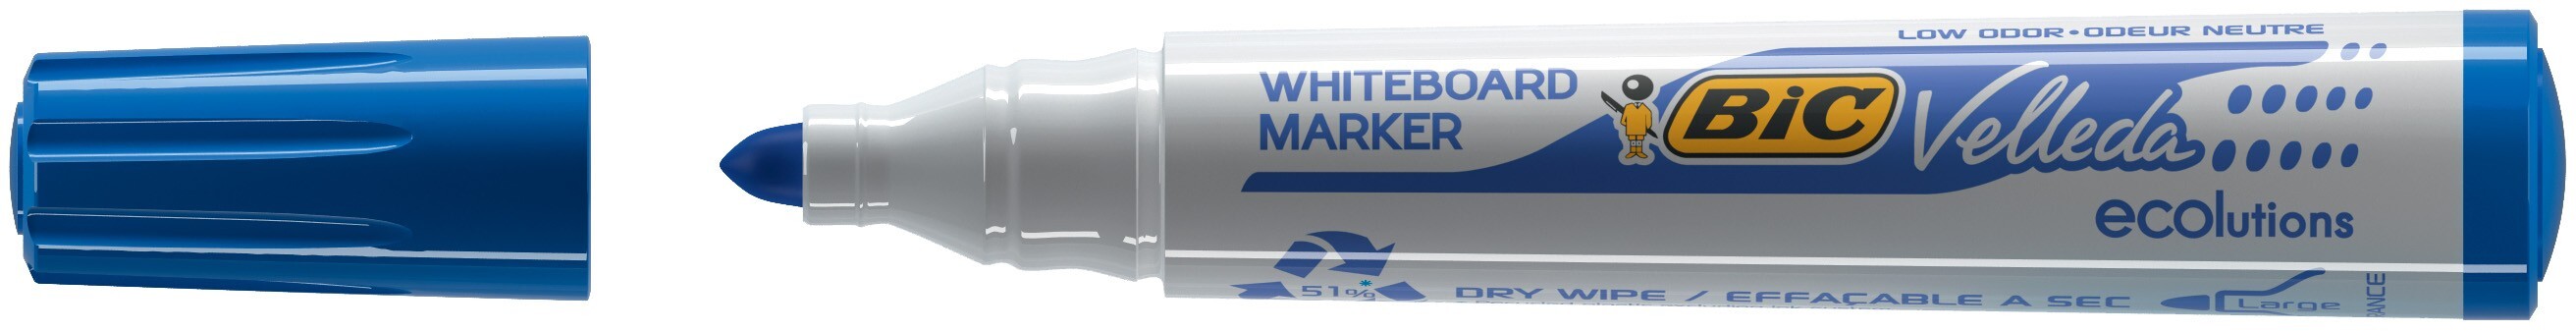 BIC Whiteboard Marker Velleda 1701 ECOlutions blau